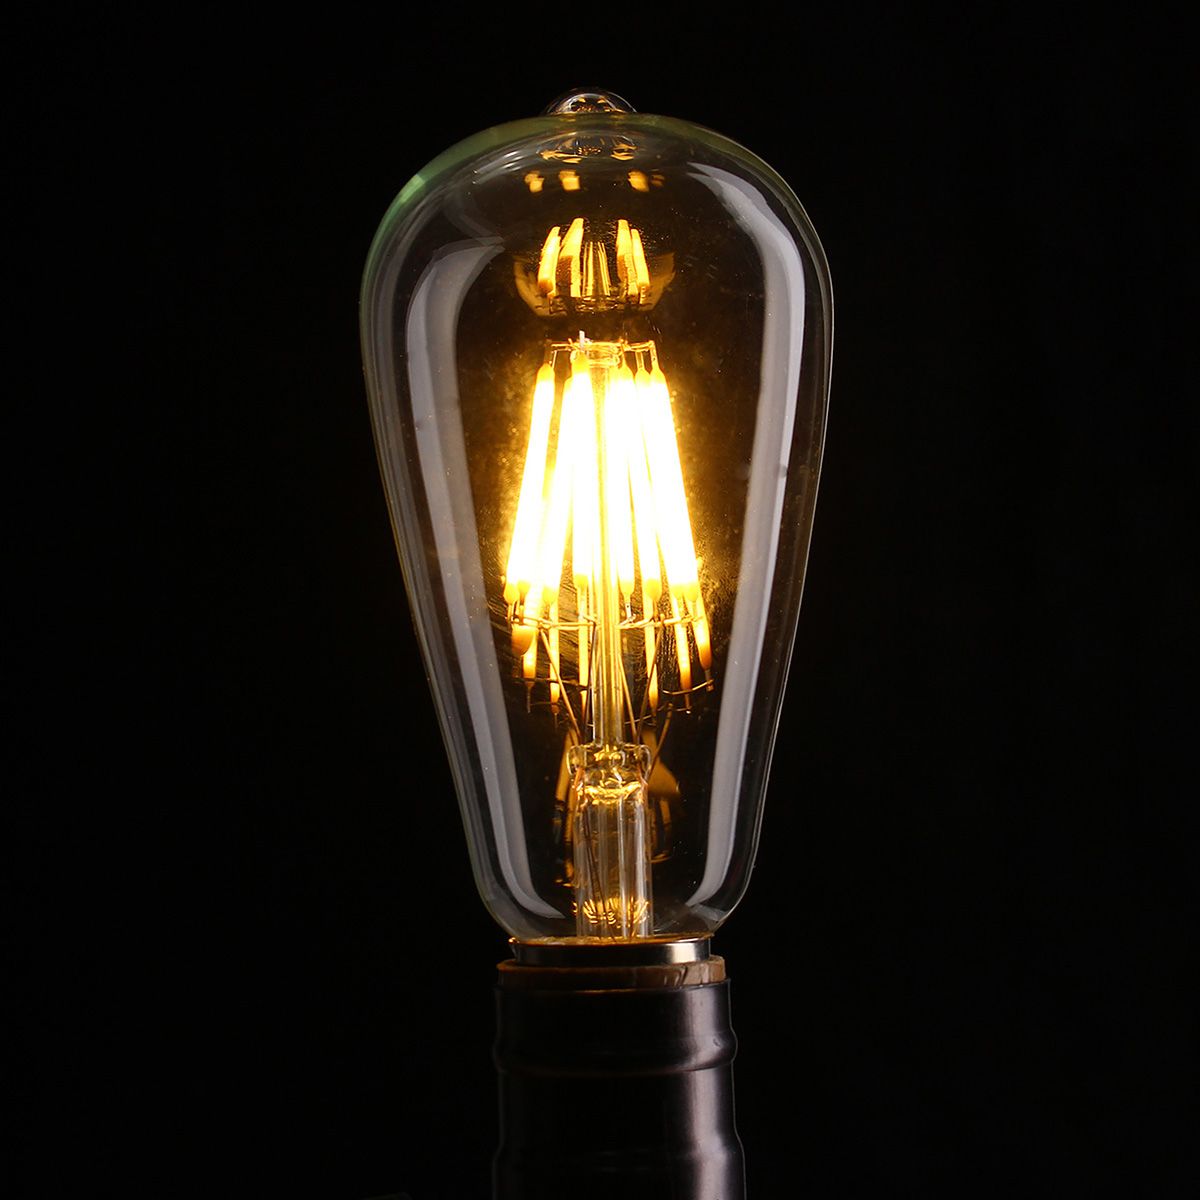 E27-ST64-8W-Clear-Cover-Dimmable-Edison-Retro-Vintage-Filament-COB-LED-Bulb-Light-Lamp-AC110220V-1113824